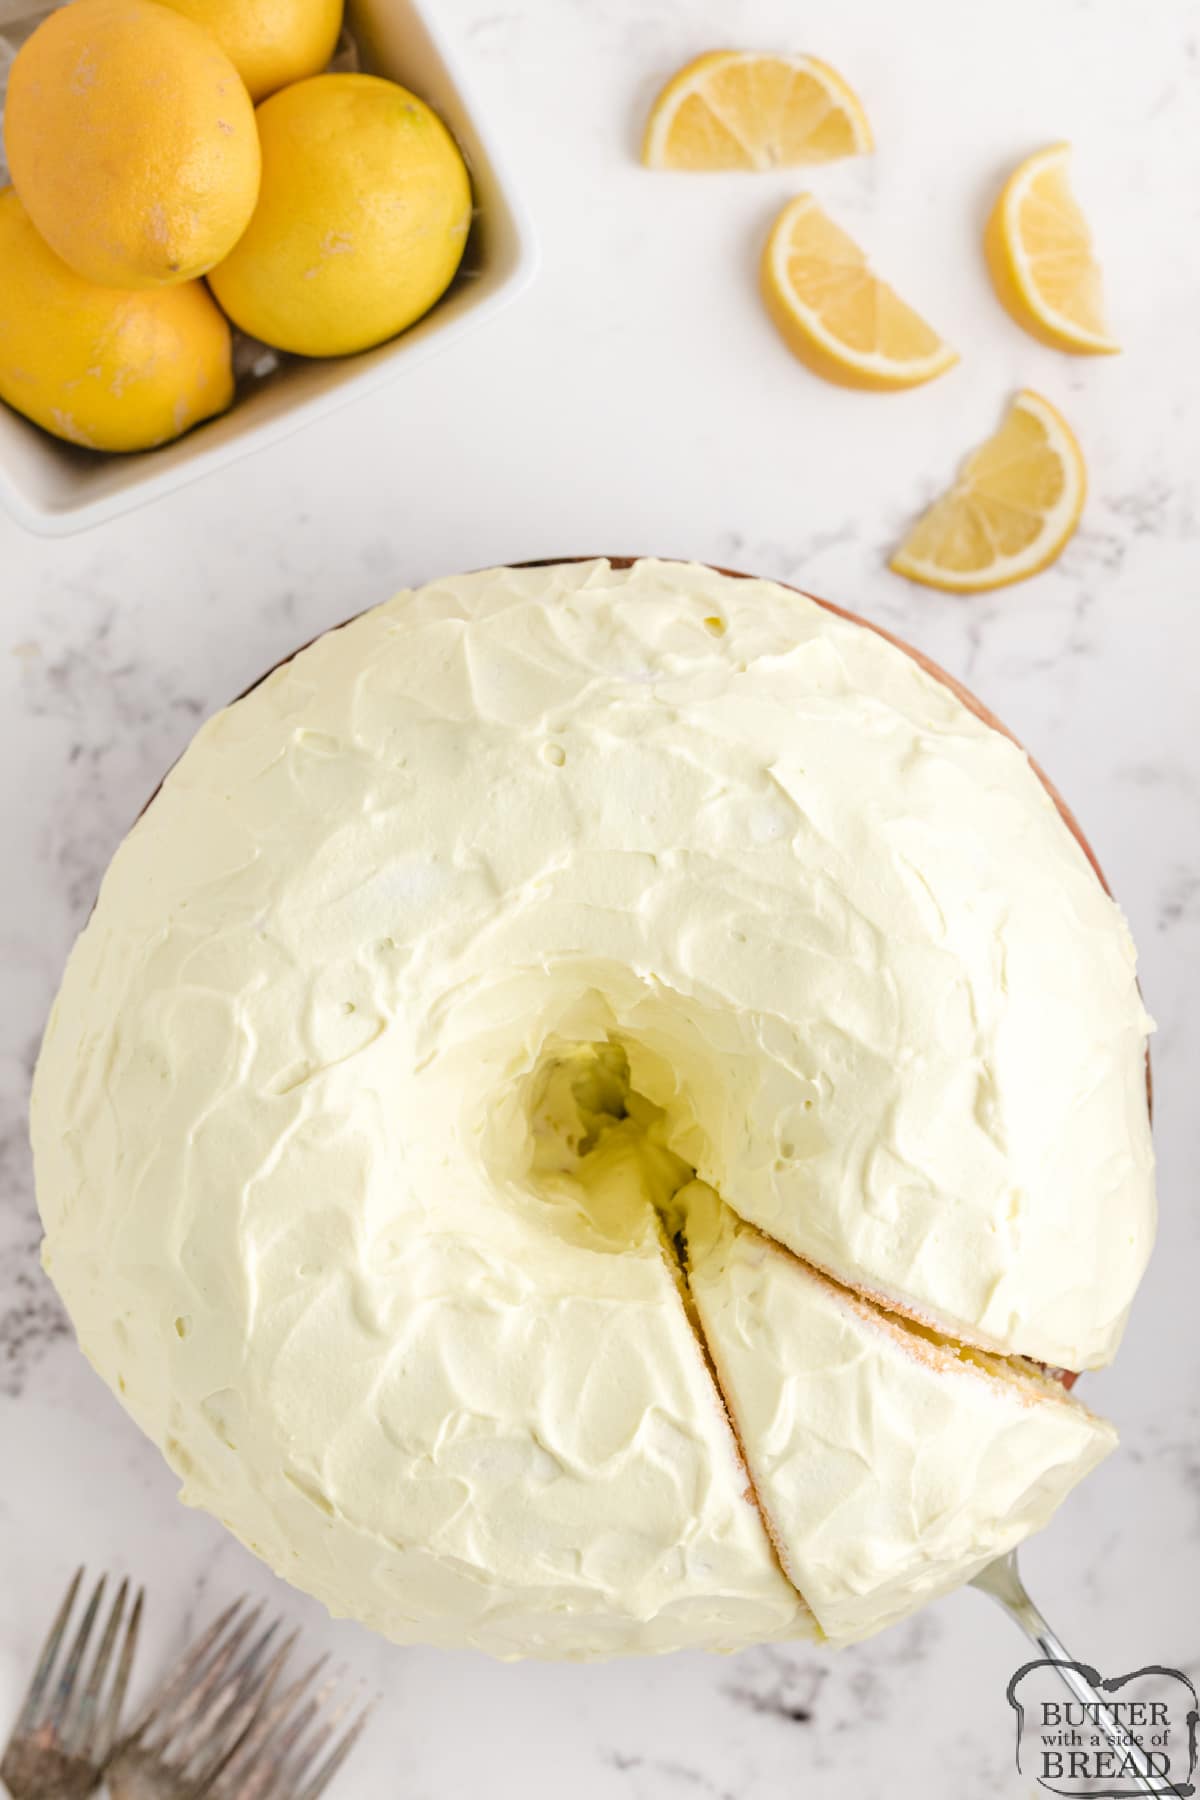 Lemon Bundt cake with lemon pie filling in between the layers